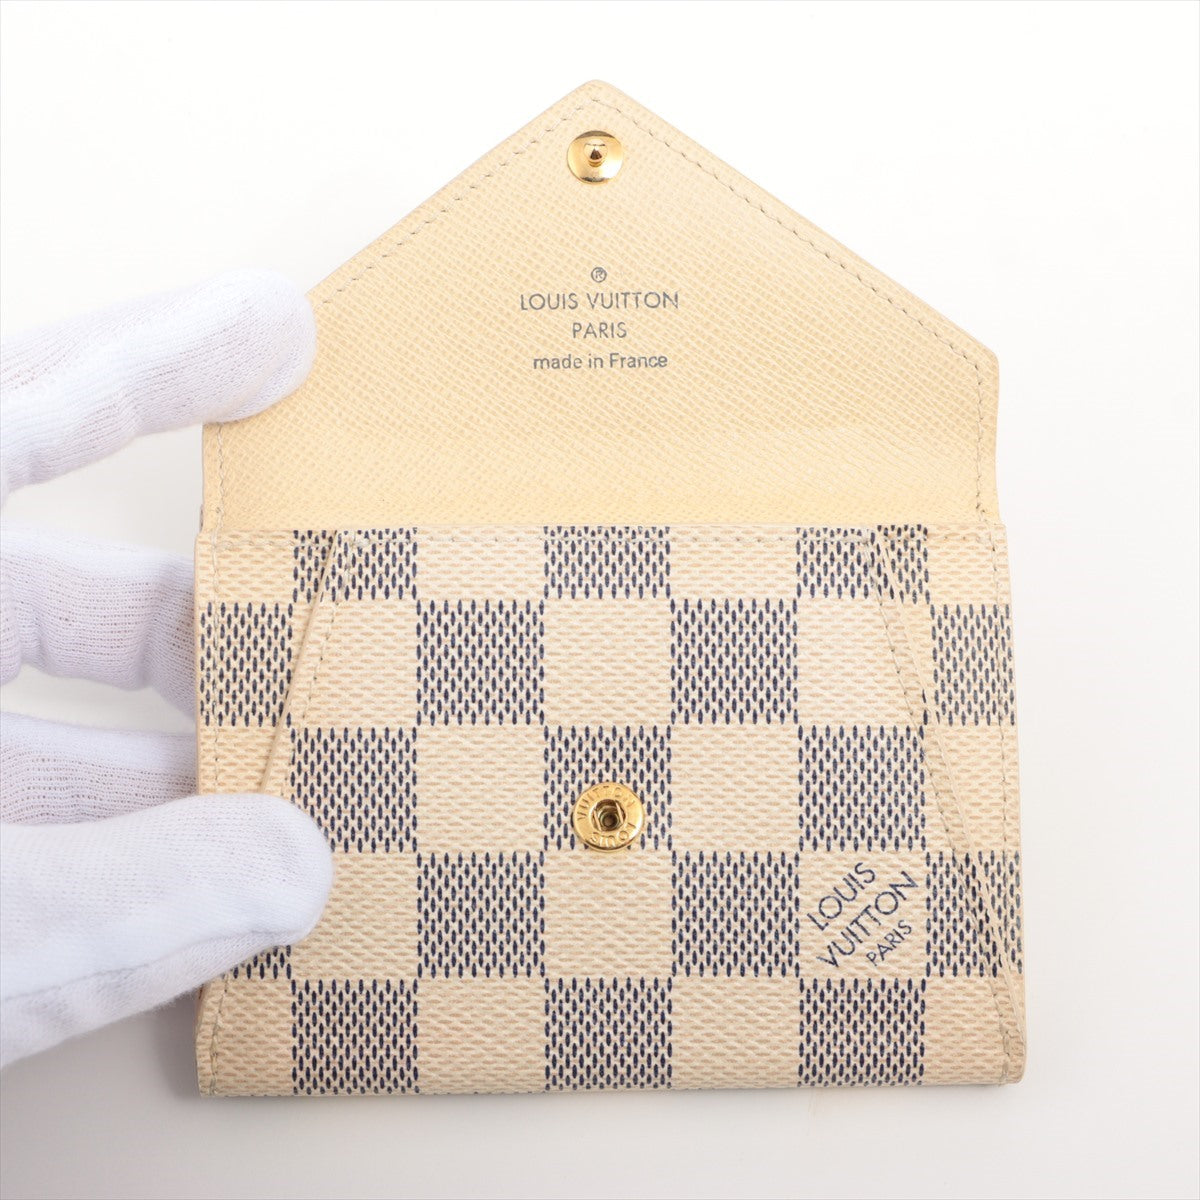 Louis Vuitton Damier azur Portefeuille Origami Compact N63100 TR3182 Compact Wallet